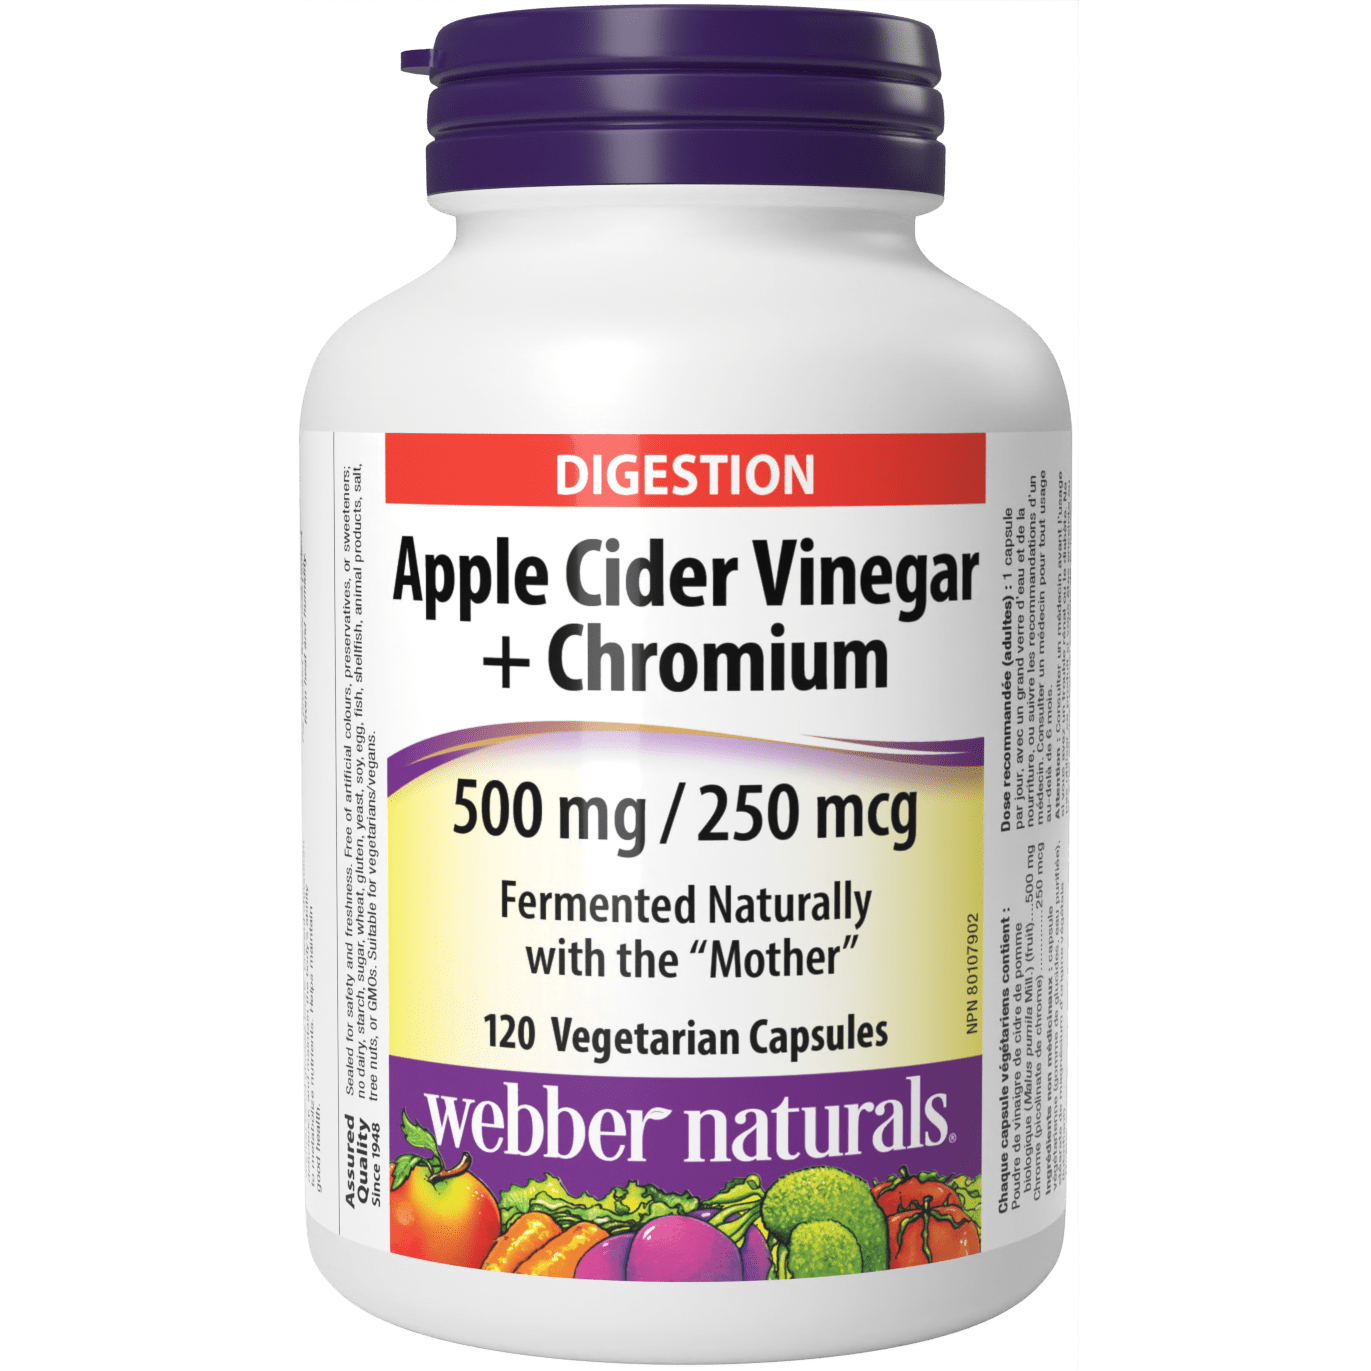 Apple Cider Vinegar + Chromium for Webber Naturals|v|hi-res|WN3936